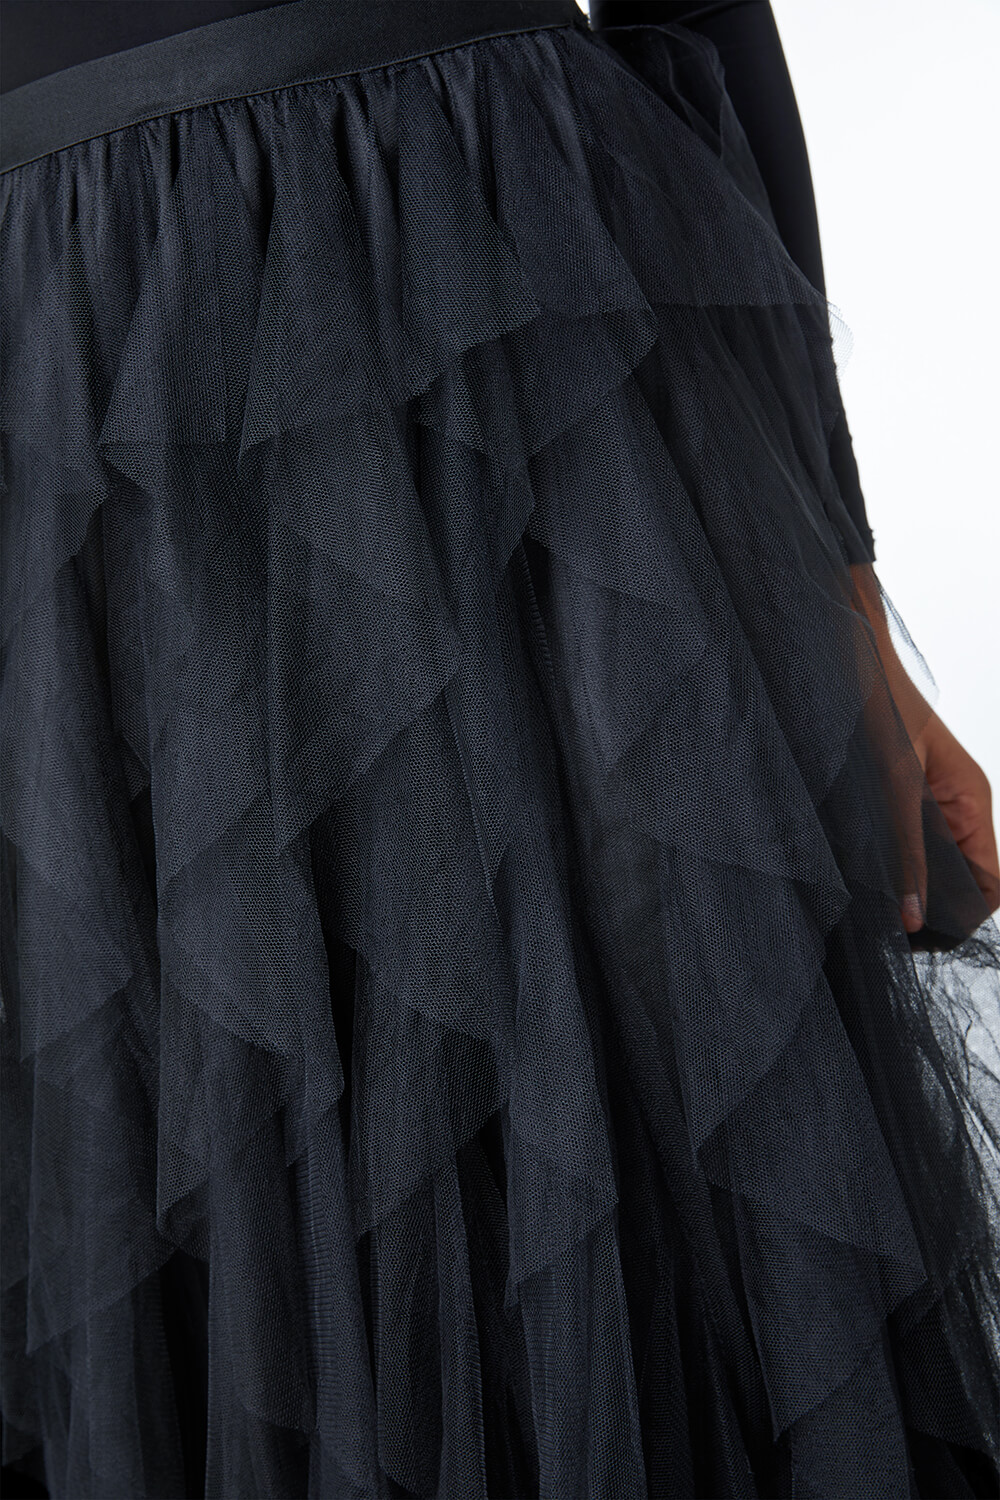 Black Elasticated Mesh Layered Skirt, Image 3 of 5